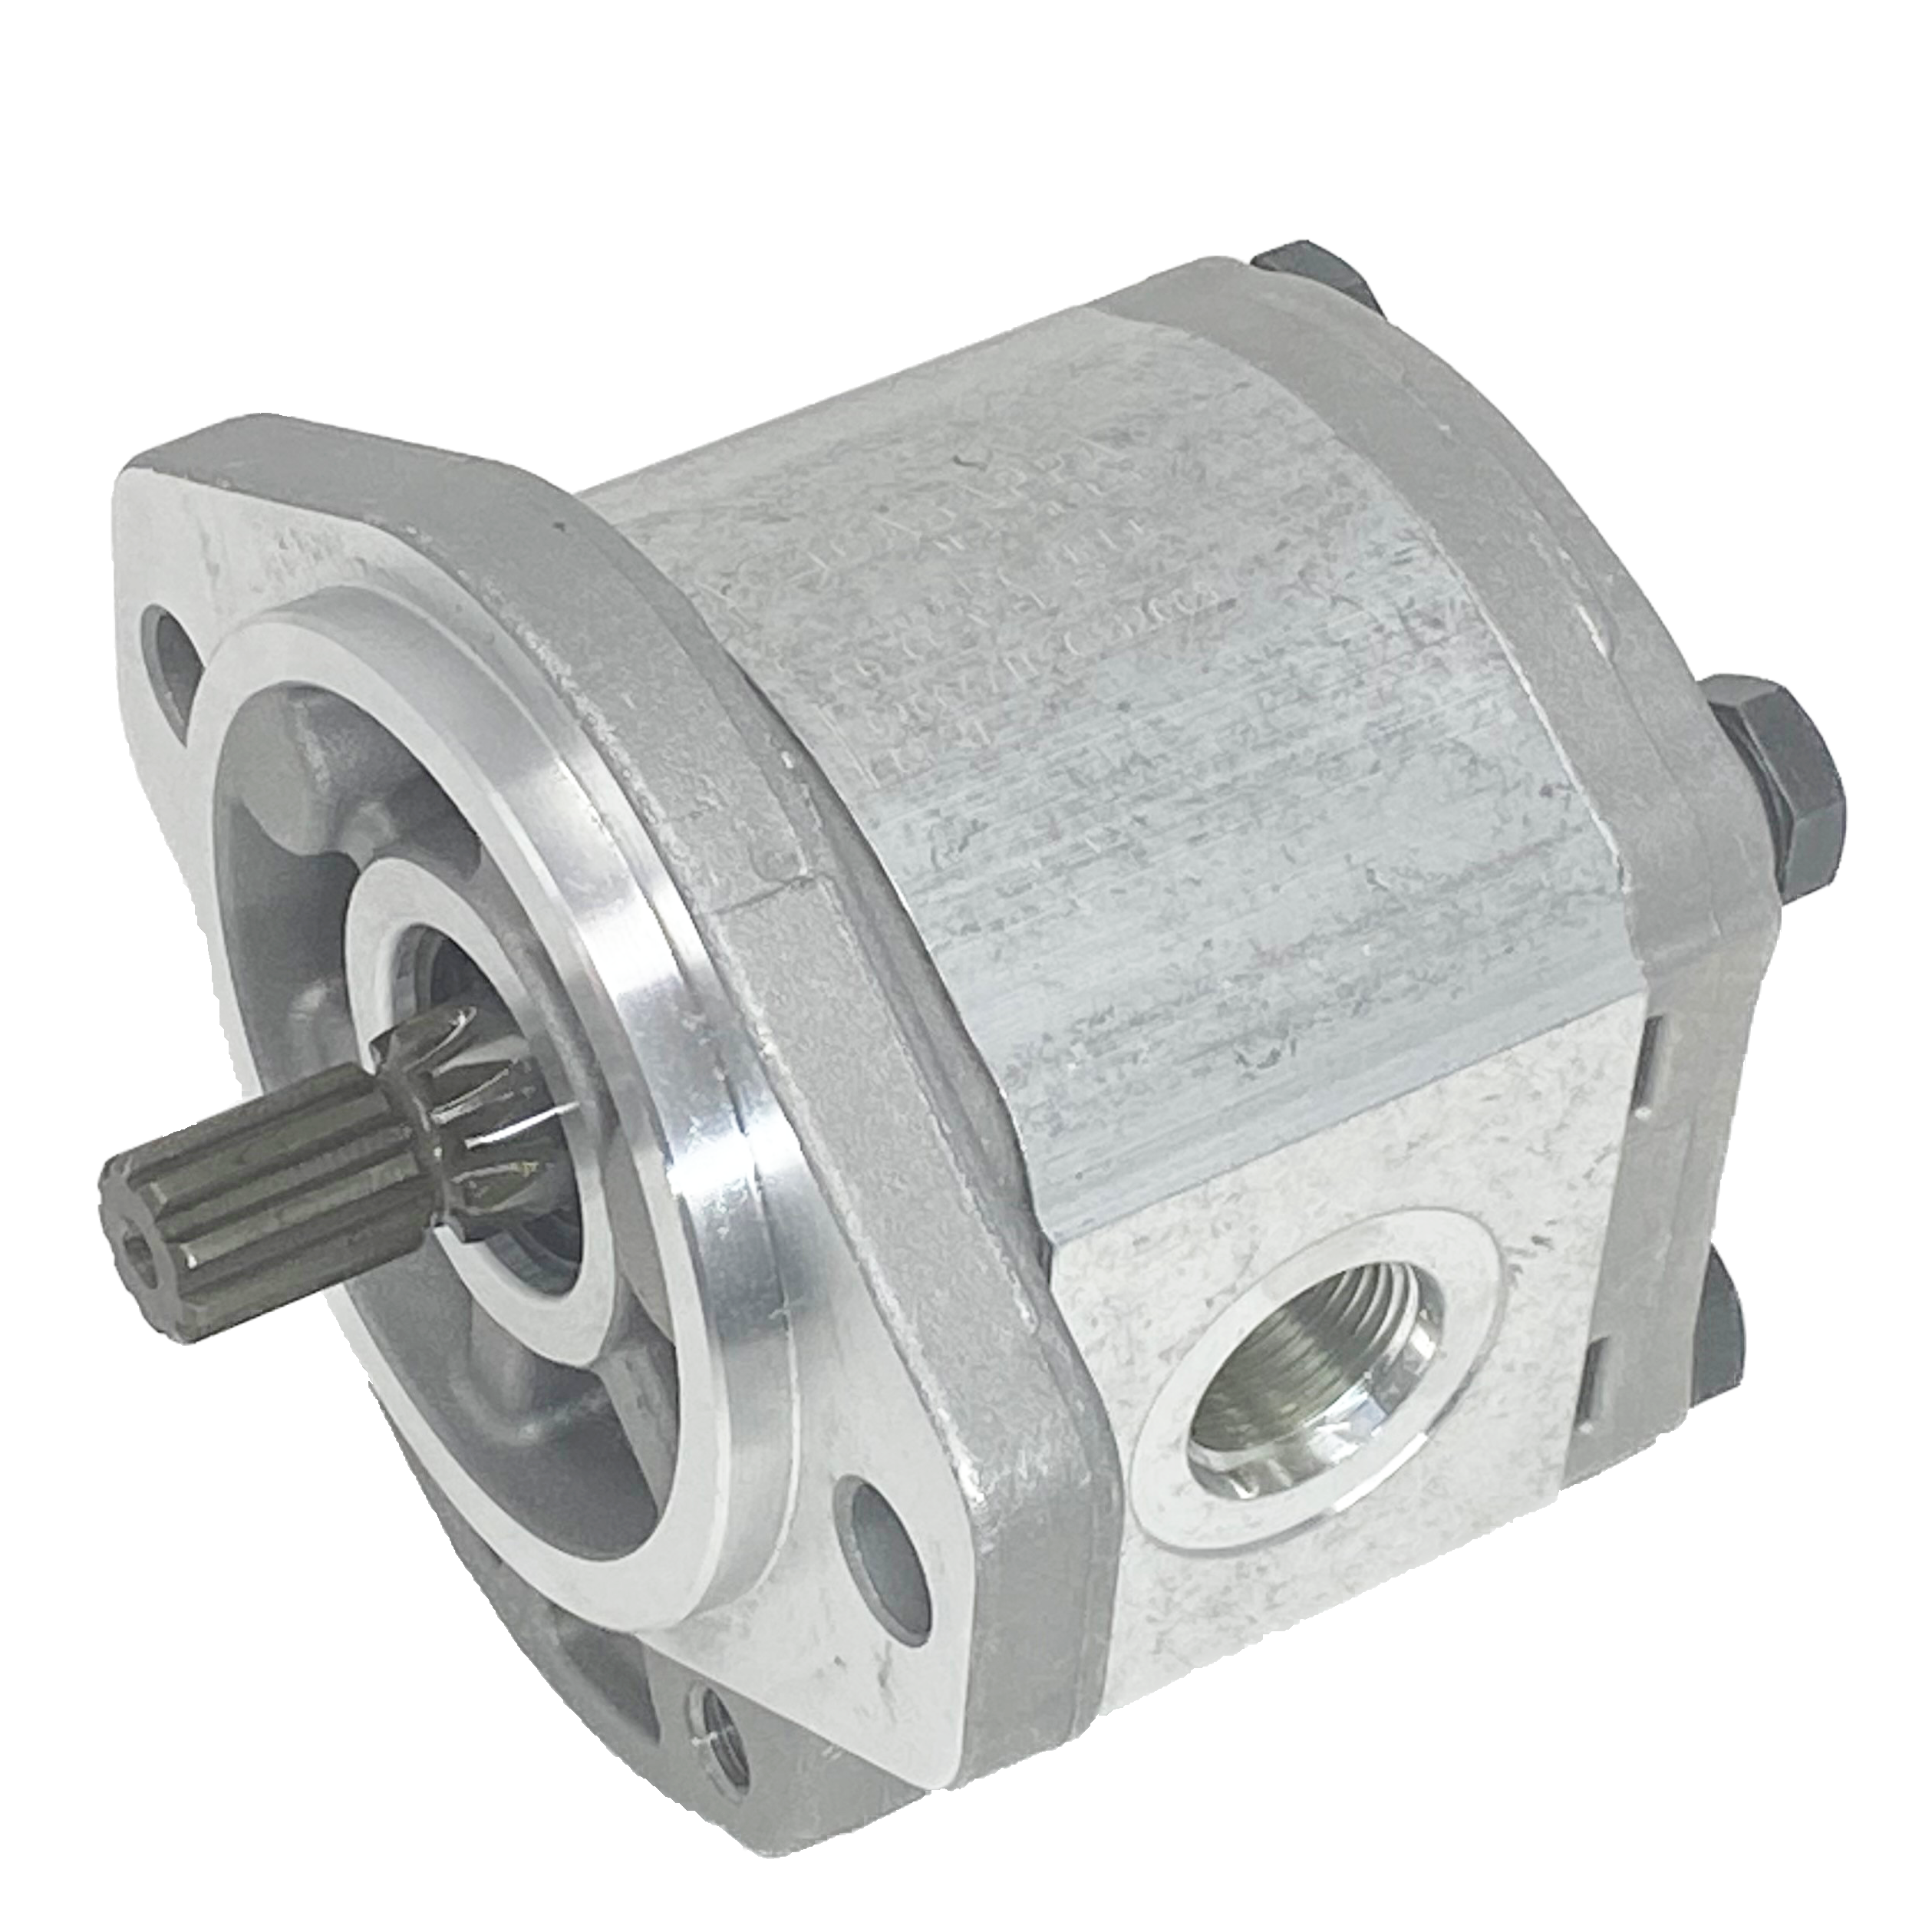 PLM20.8R0-03S1-LOC/OC-N-EL : Casappa Polaris Gear Motor, 8.26cc, 3625psi Rated, 3500RPM, Reversible Rear External Drain, 9T 16/32dp Shaft, SAE A 2-Bolt Flange, 0.625 (5/8") #10 SAE Inlet, 0.625 (5/8") #10 SAE Outlet, Aluminum Body & Flange